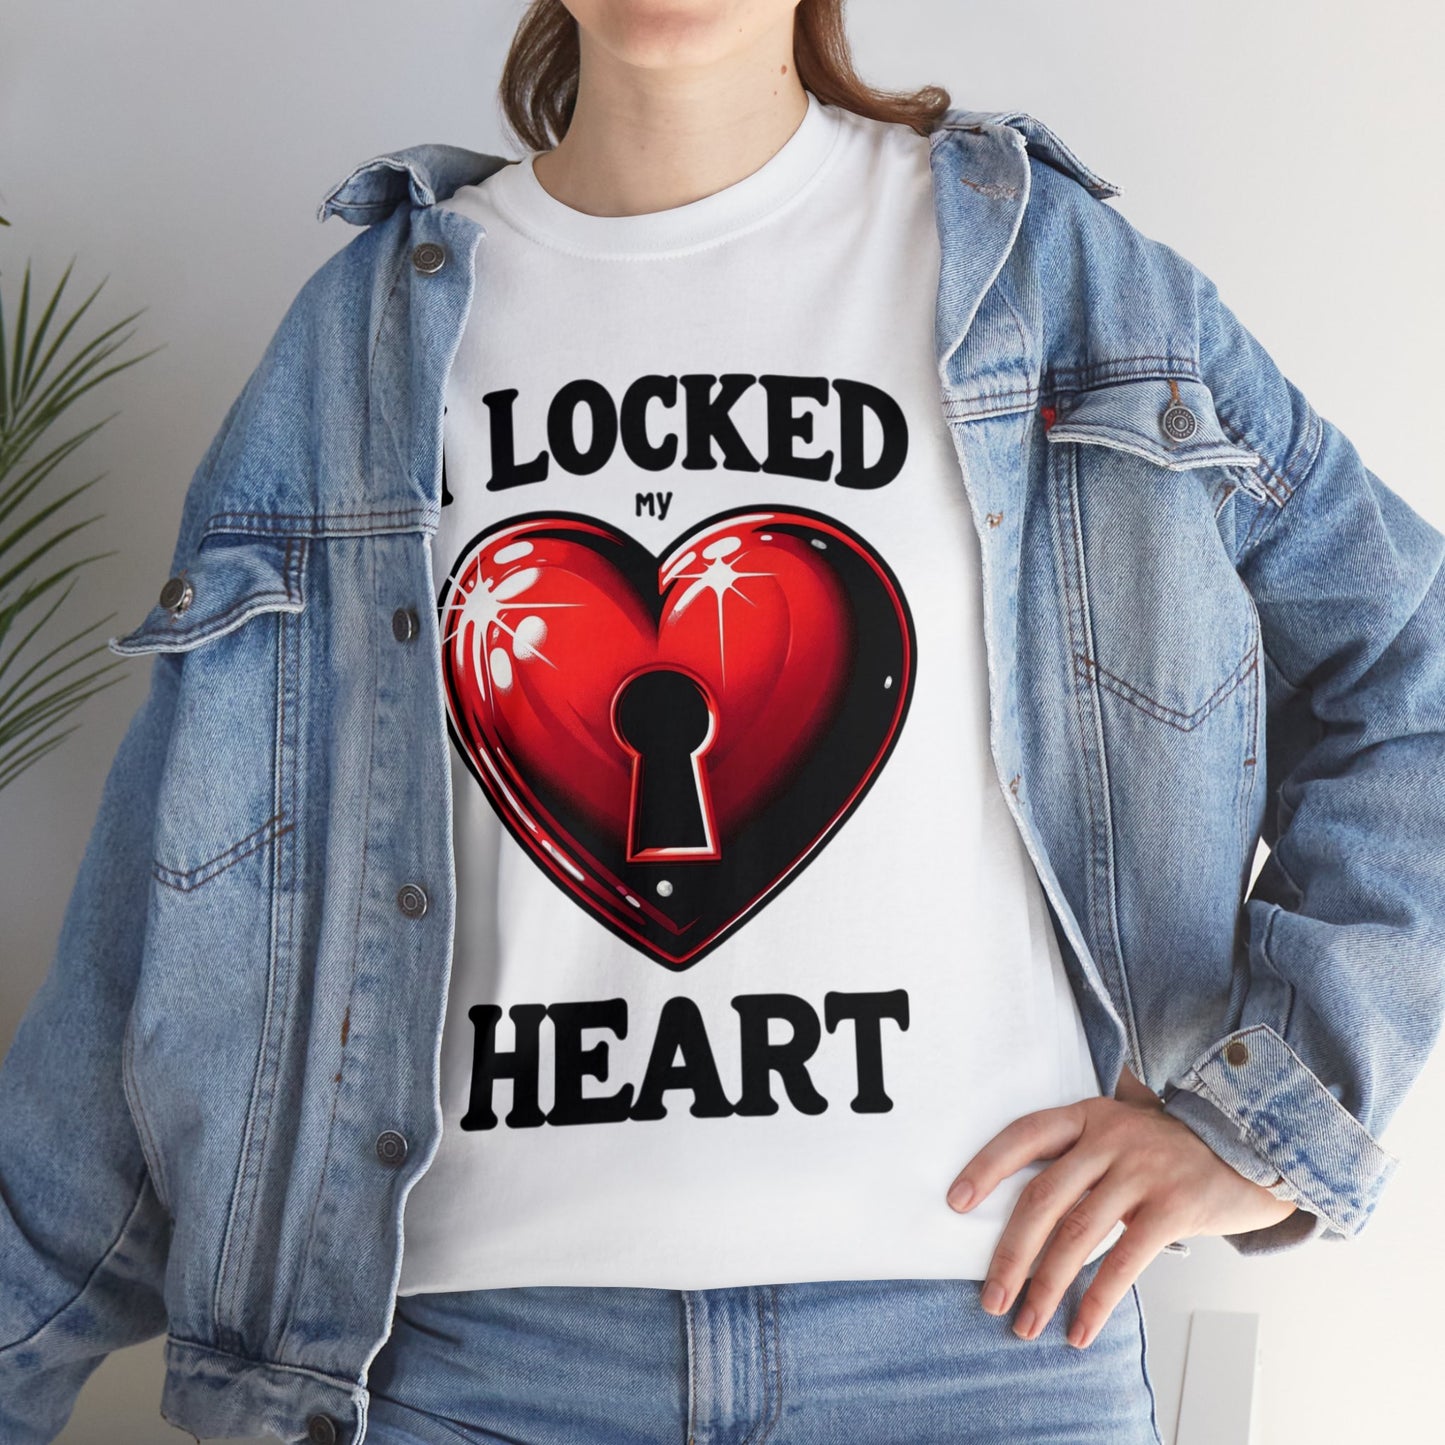 I Locked My Heart | Deluxe Unisex Tee